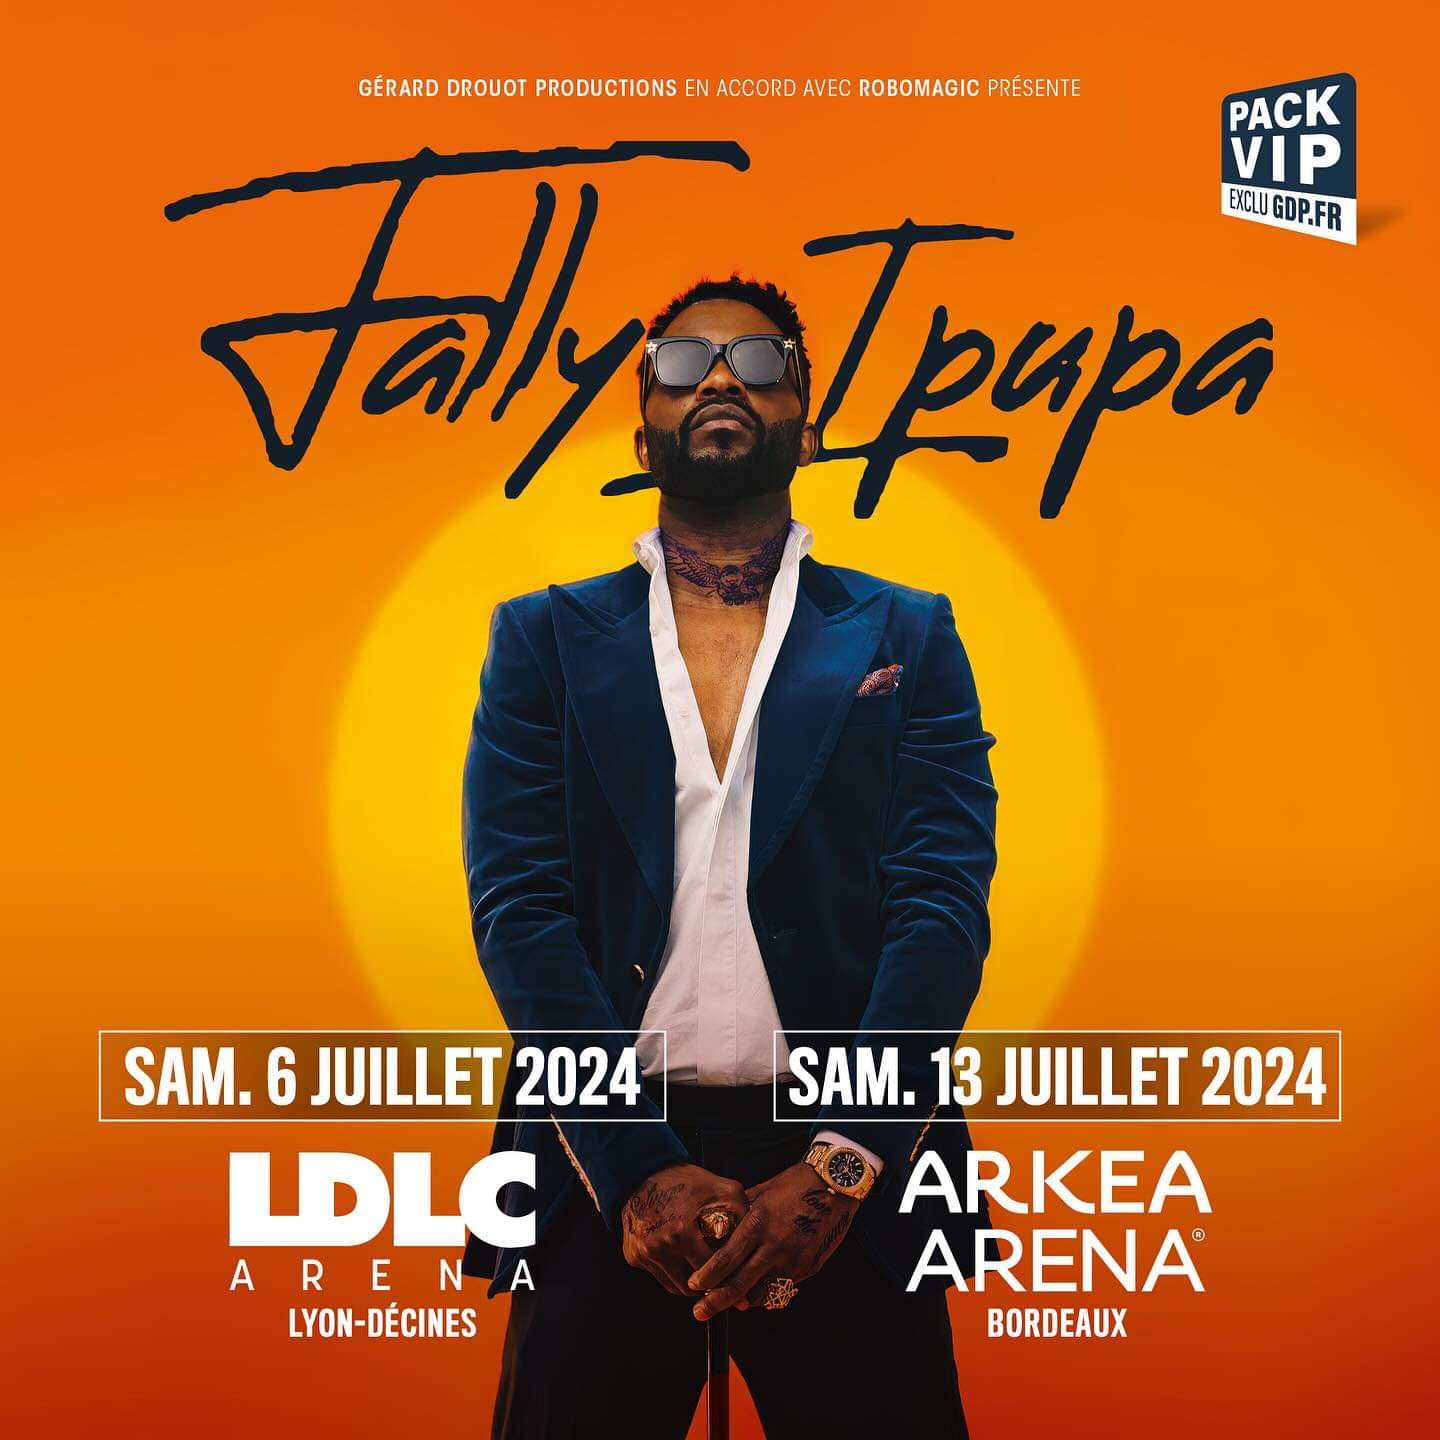 Fally Ipupa in der Arkea Arena Tickets